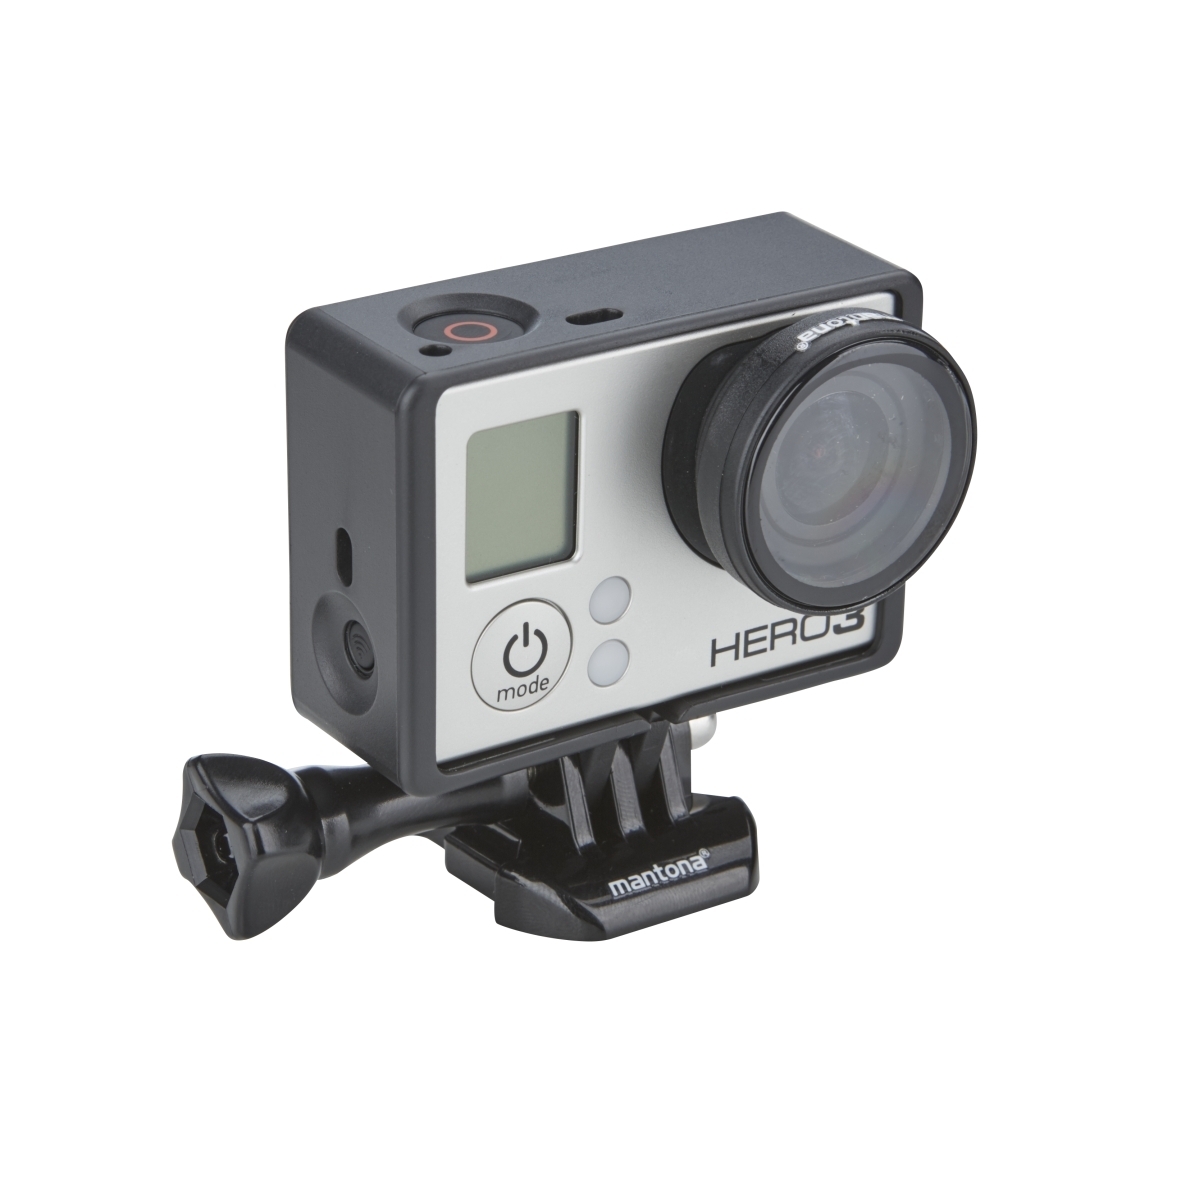 Wealpe Rahmengehäuse mit Objektivdeckel Kompatibel mit GoPro Hero 4 3 Kameras 3 